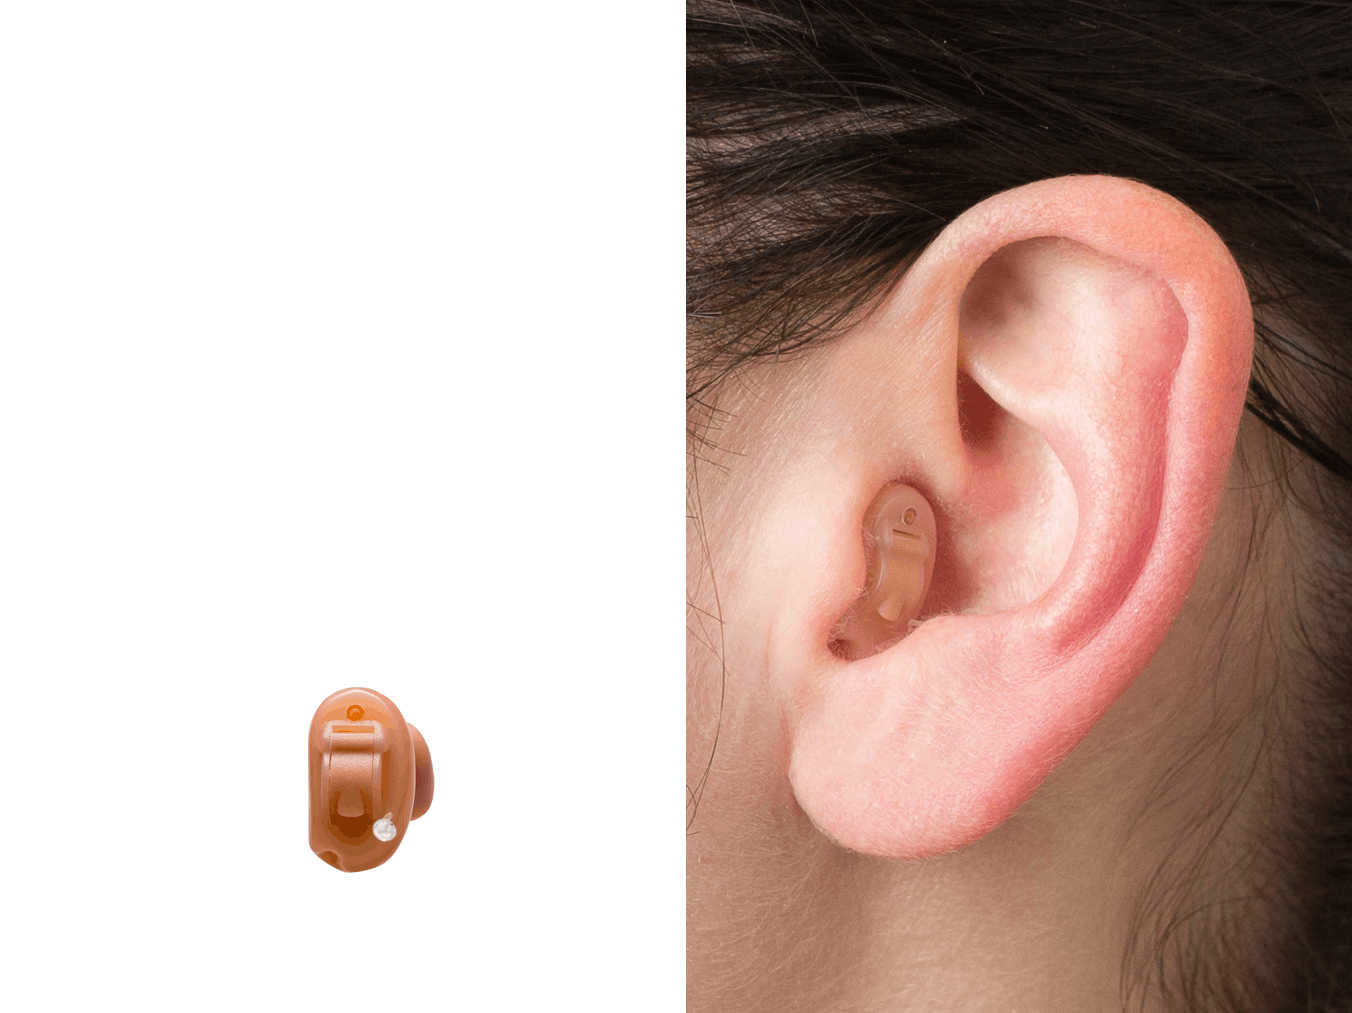 Ear hearing. Helix hearing слуховой аппарат. Аппарат слуховой внутриушной конха. Слуховой аппарат внутриушной невидимый. «Невидимый» слуховой аппарат (IIC).